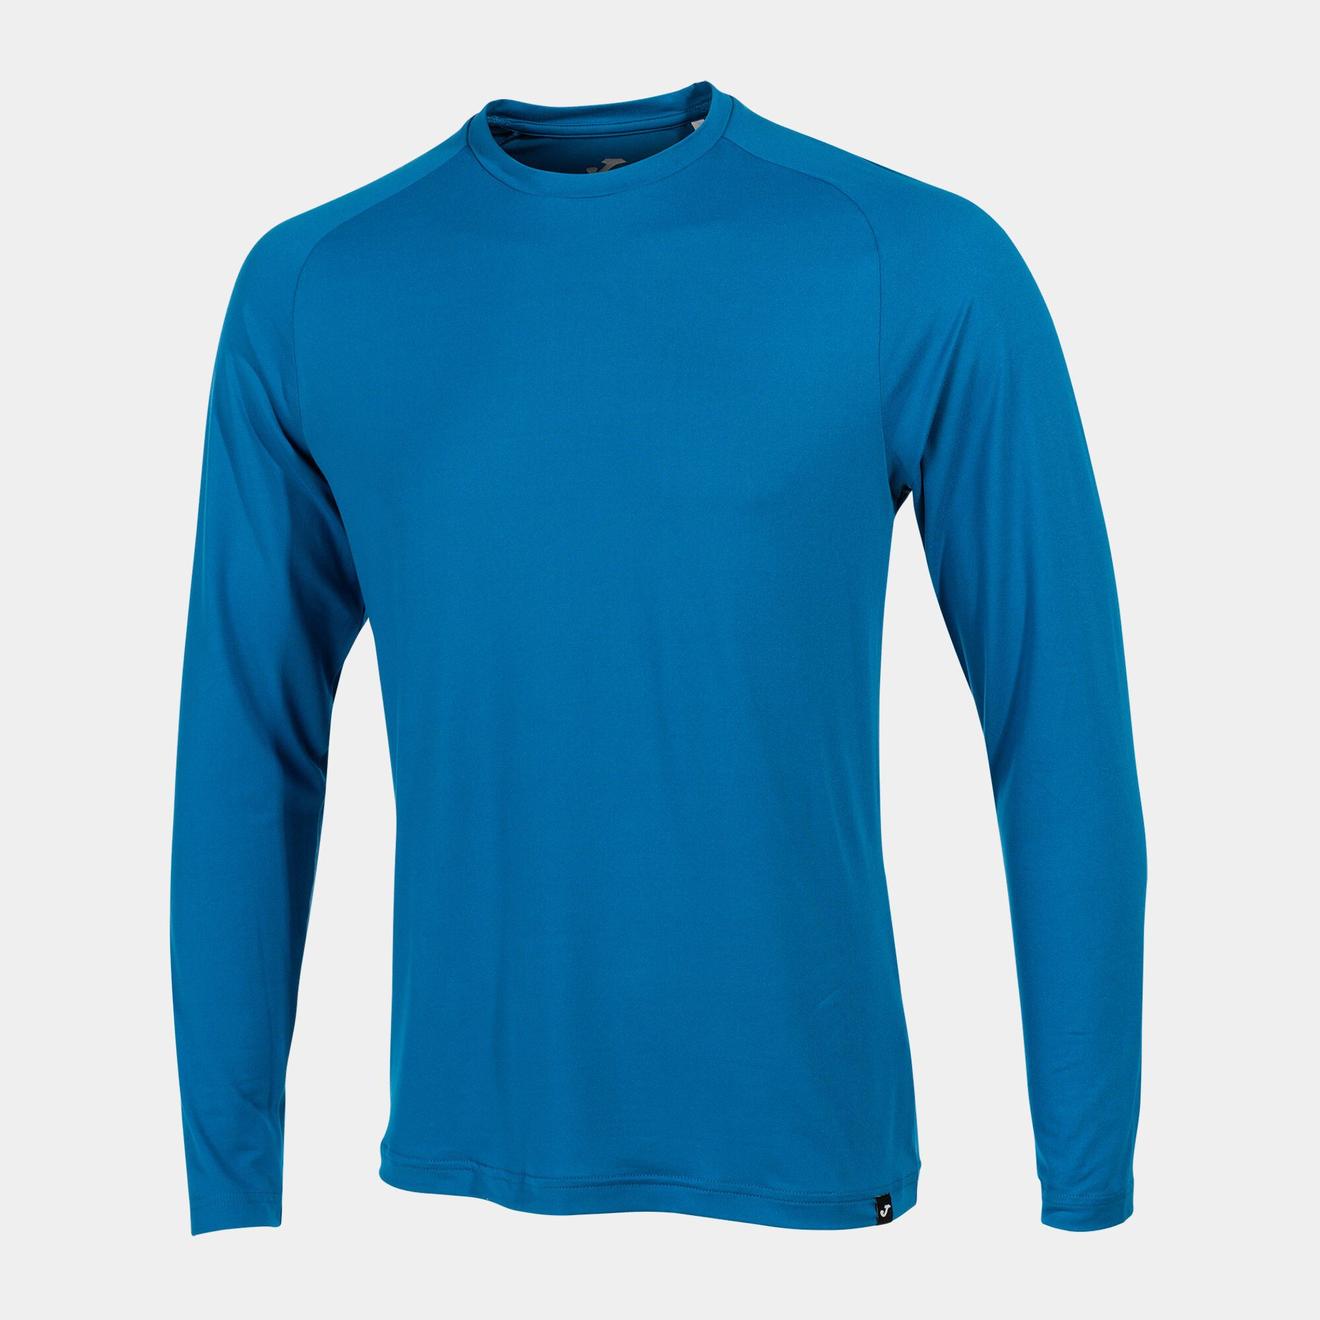 Oferta de Camiseta manga larga hombre Explorer azul por $11,78 en Joma